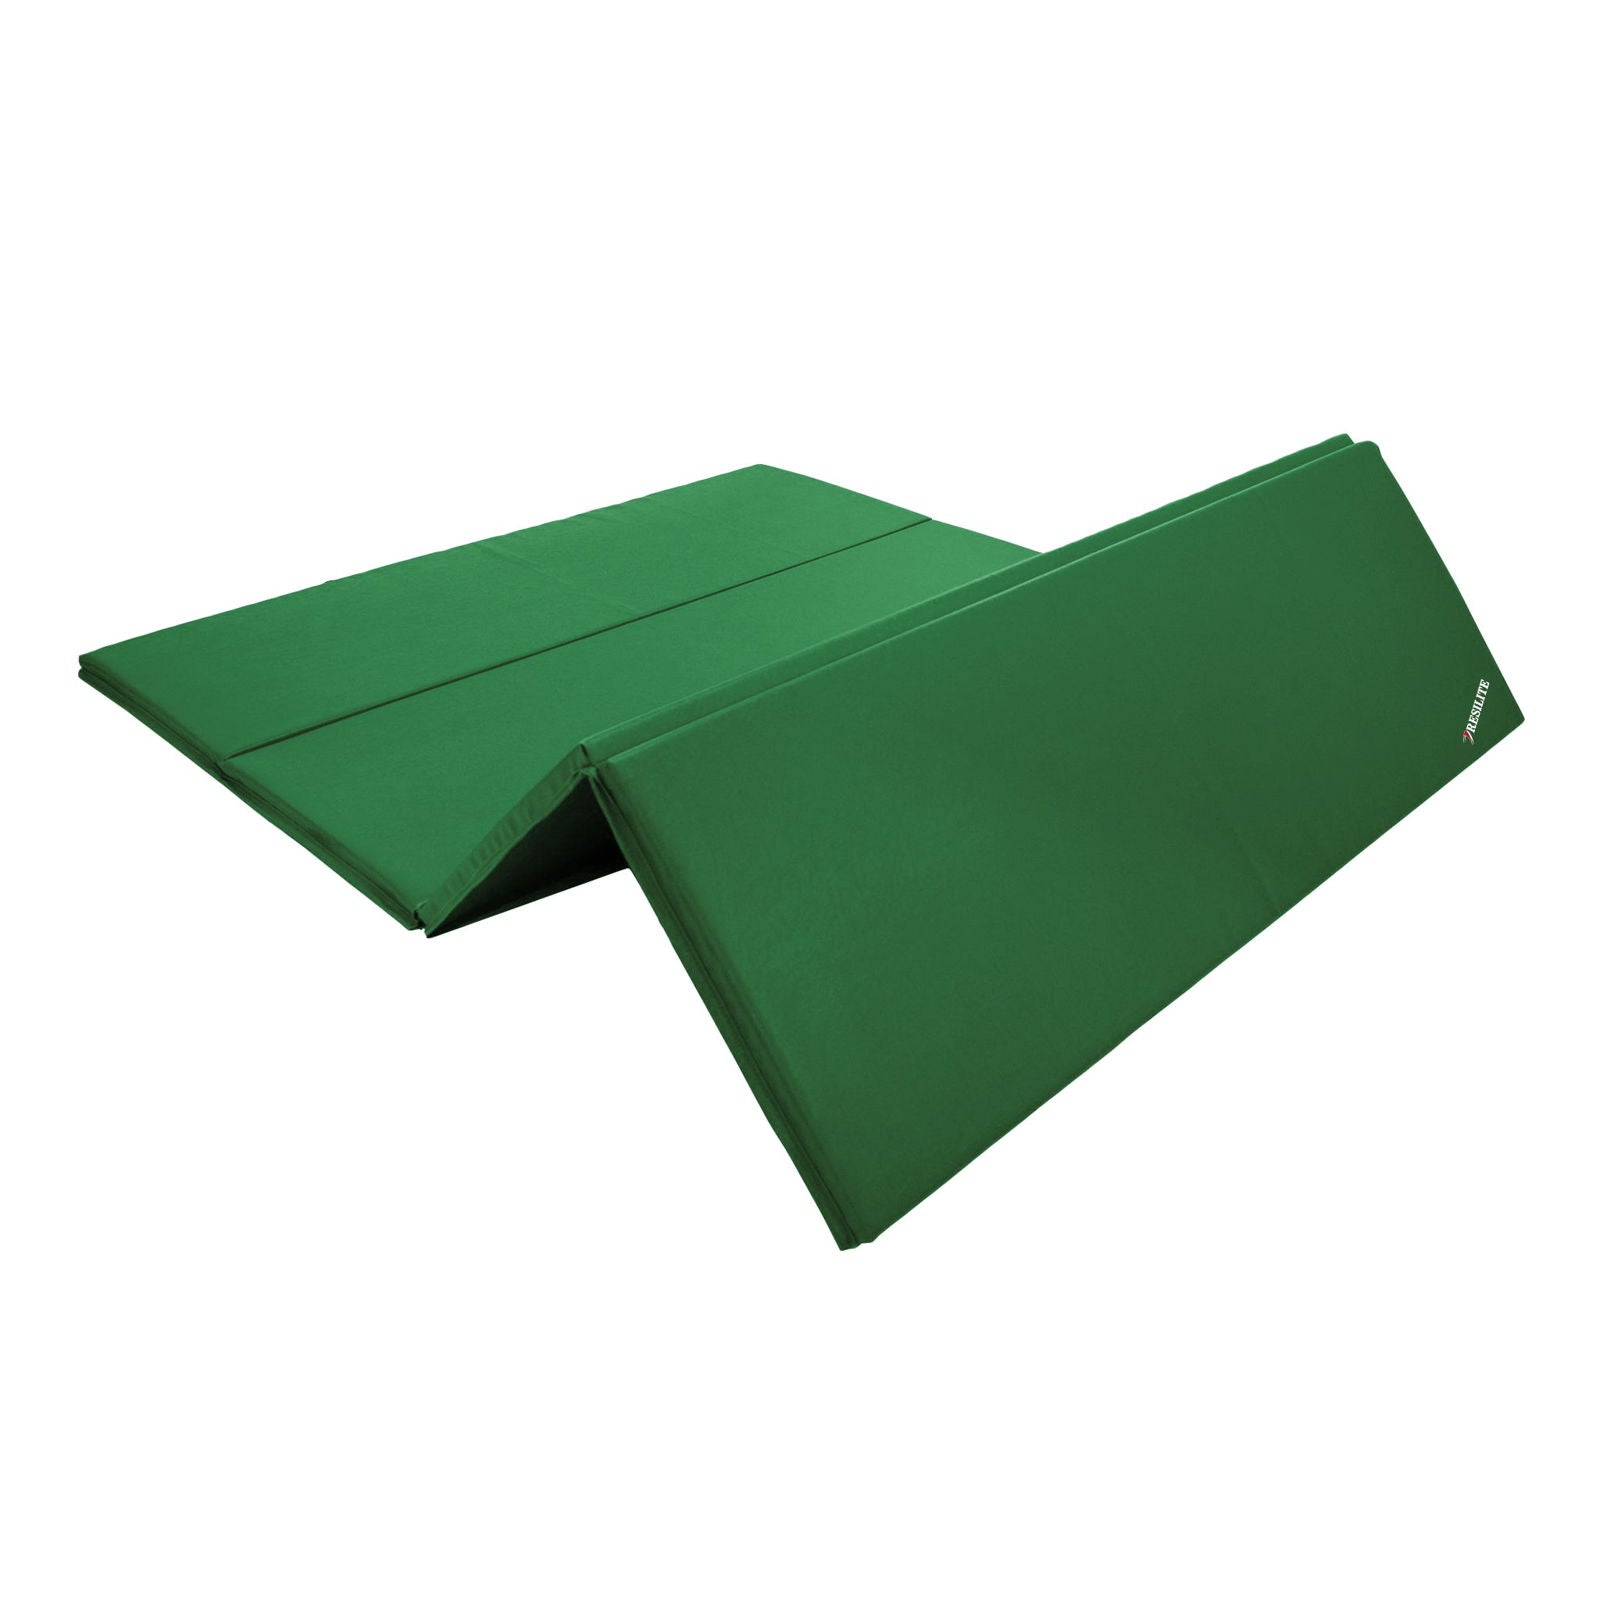 2" Senior Folding Mats - Resilite Mats